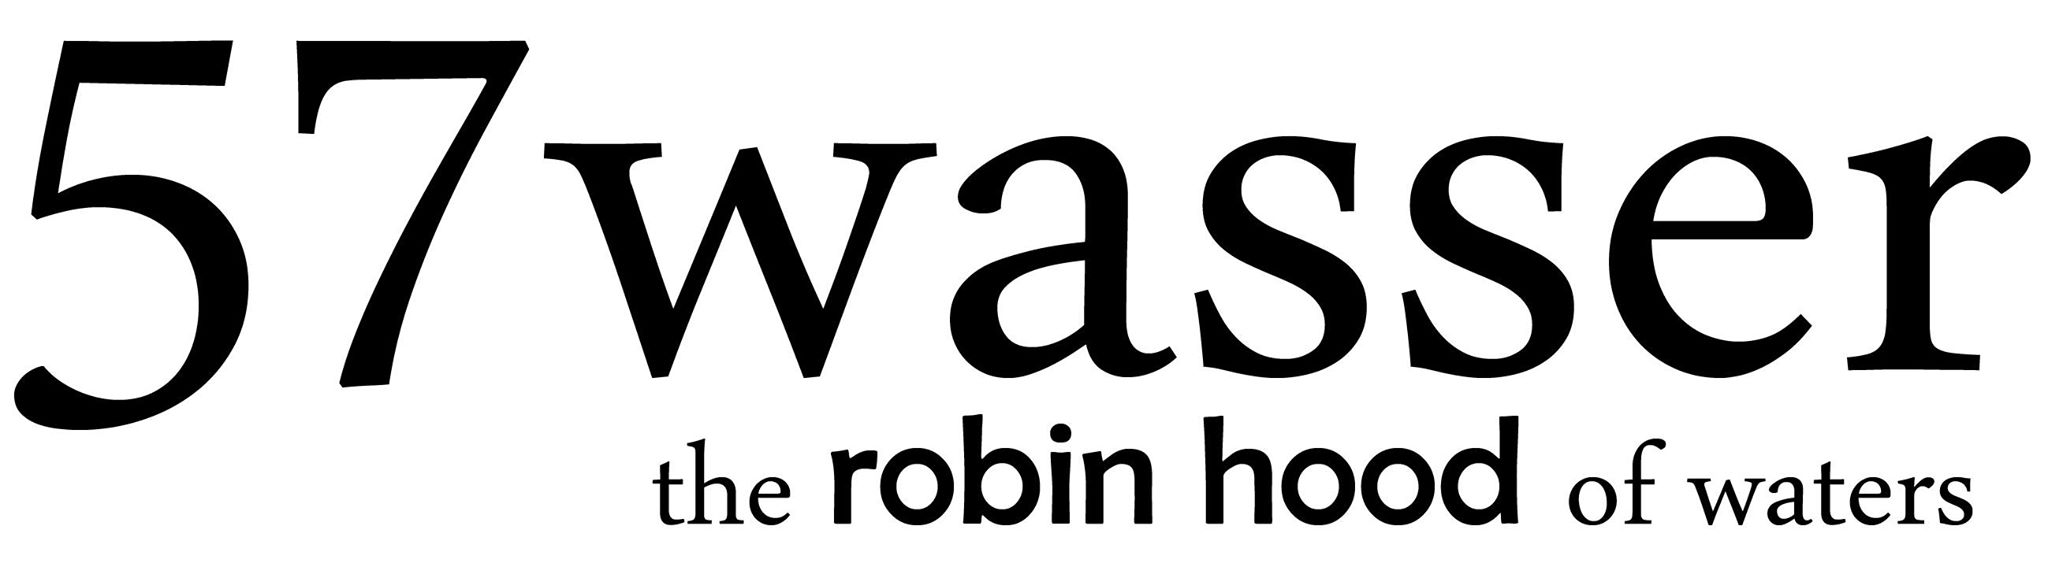 57 wasser - The robin hood of waters